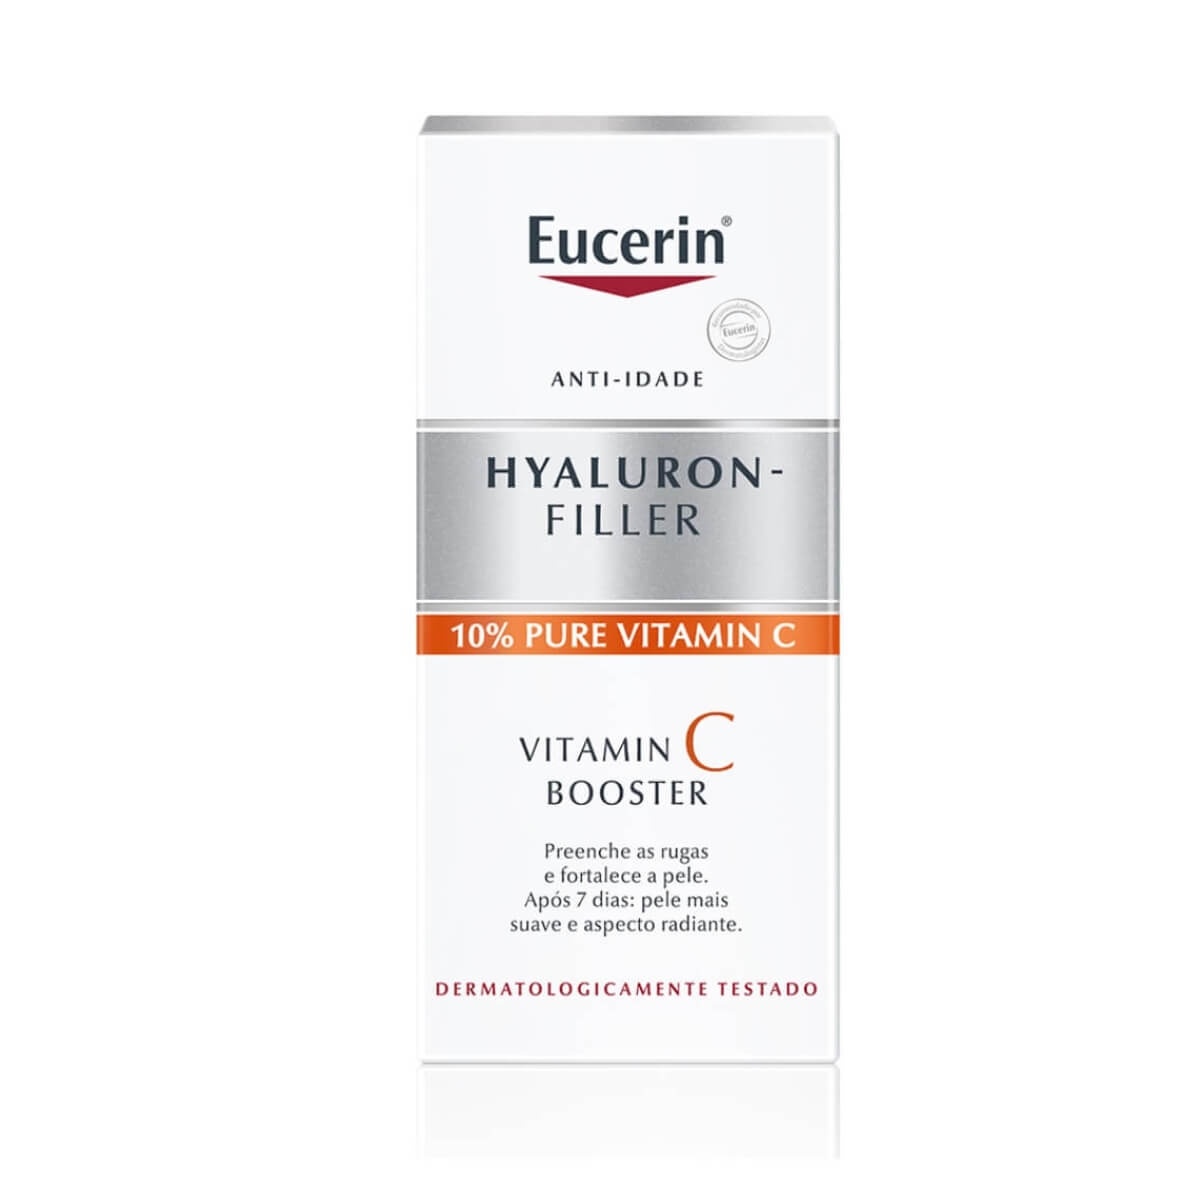 Sérum Eucerin Hyaluron Filler Vitamina C Bosster 8ml